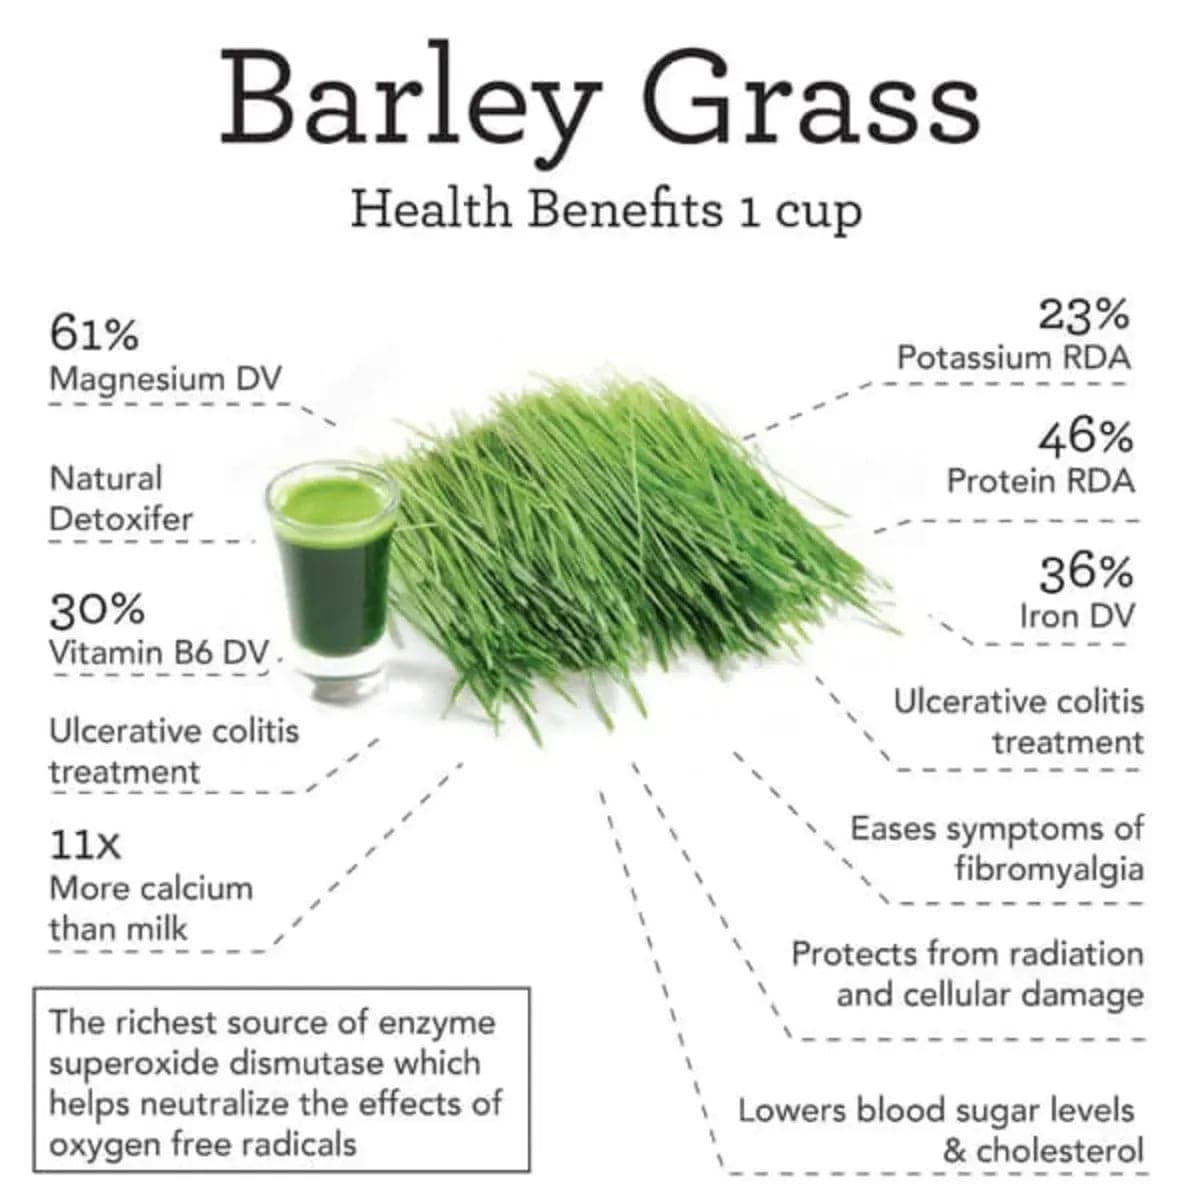 NAVETA™ Barley grass powder 100% Pure & Organic (20 Packs)